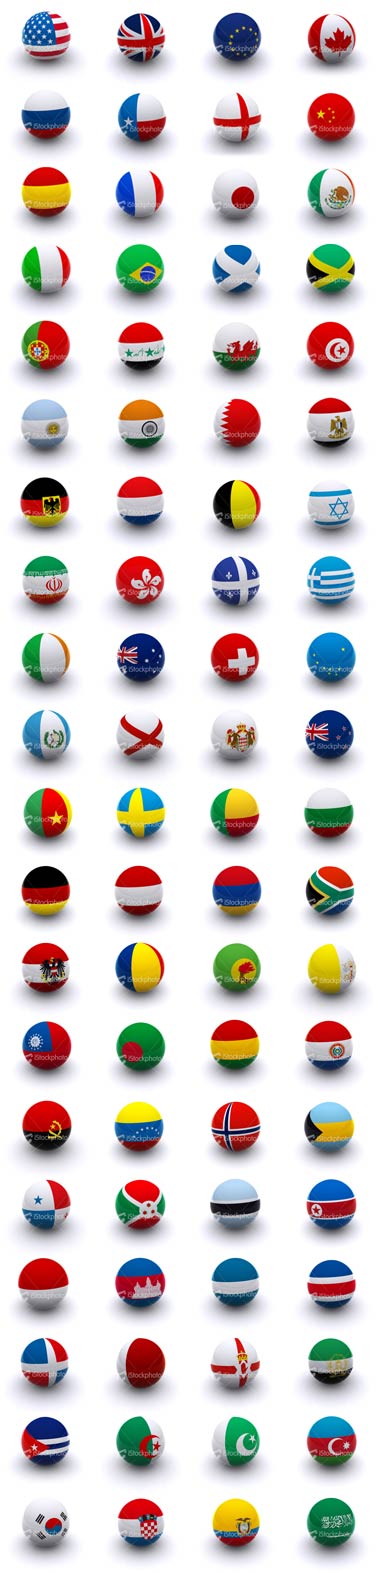 3D Ball - Mexico Flag stock photo 5131140 - iStock